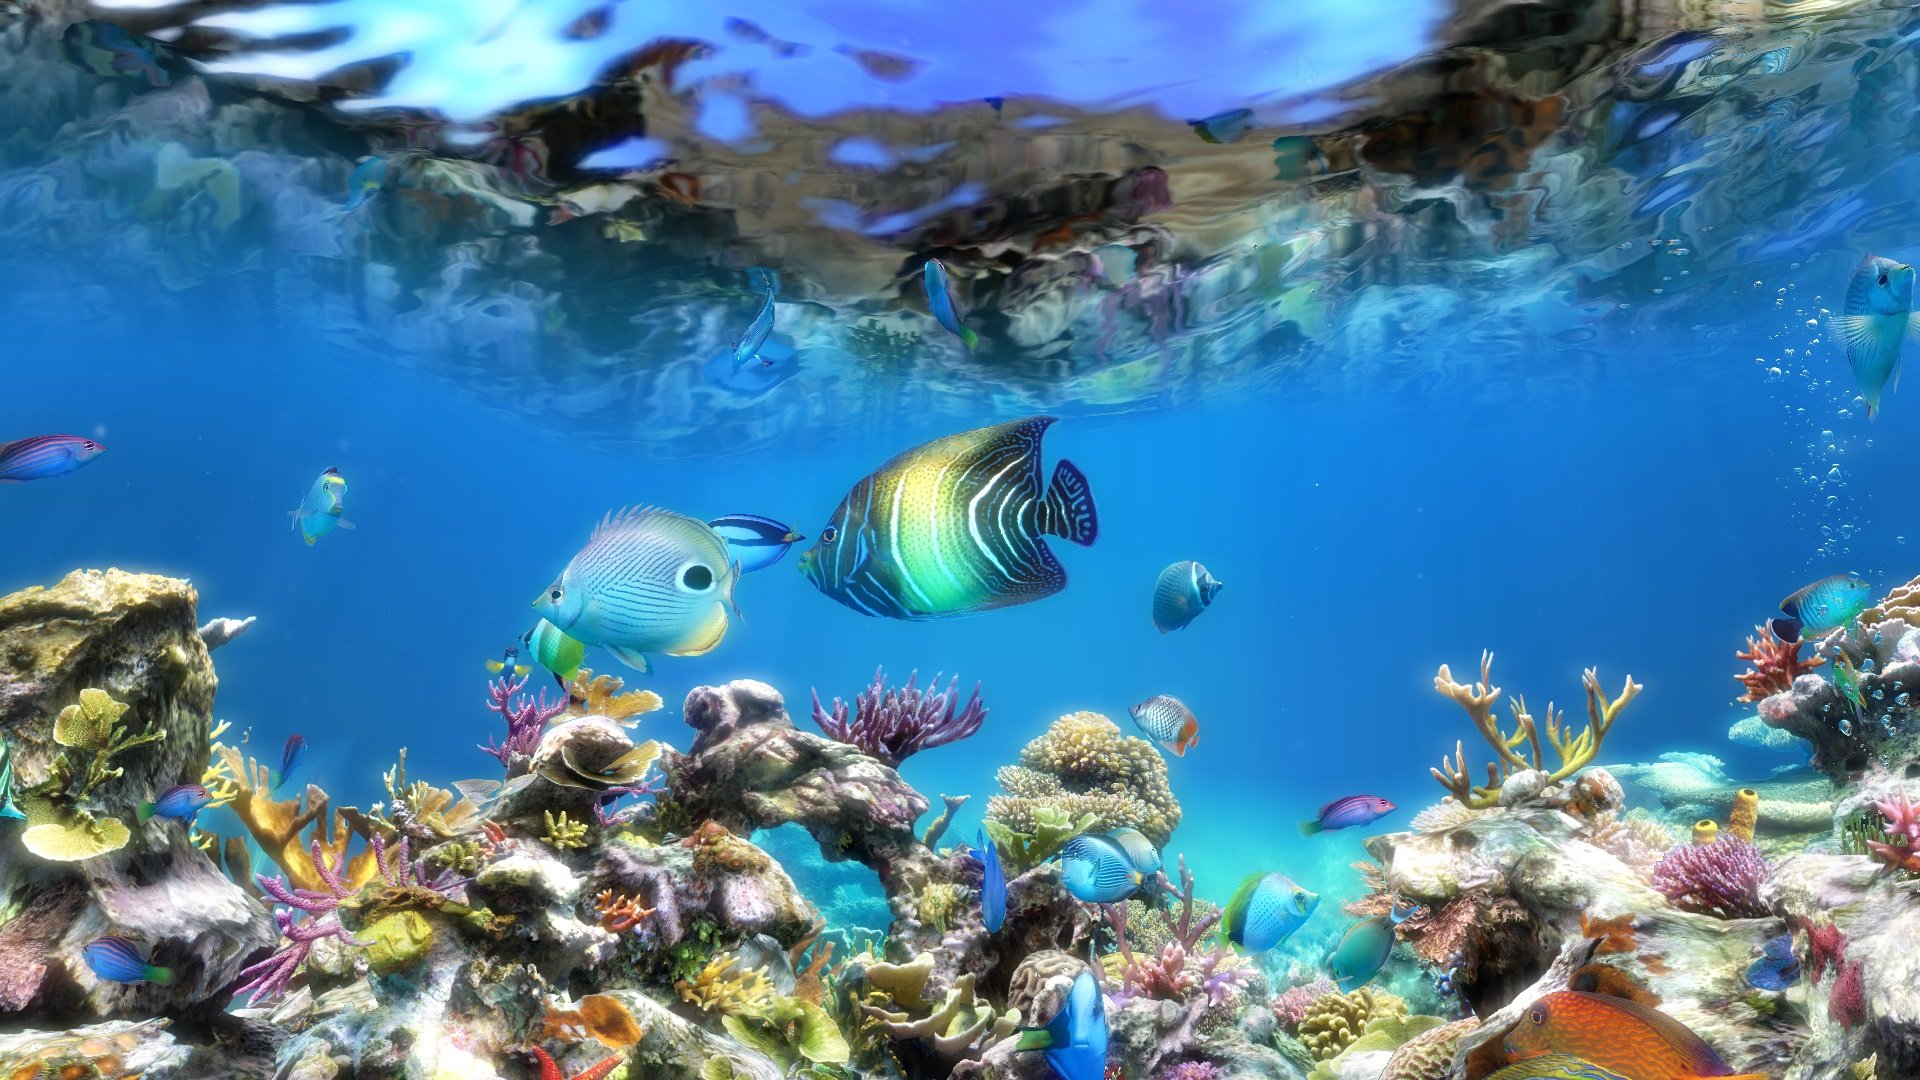 aquarium live wallpaper hd,fish,underwater,marine biology,coral reef,coral reef fish